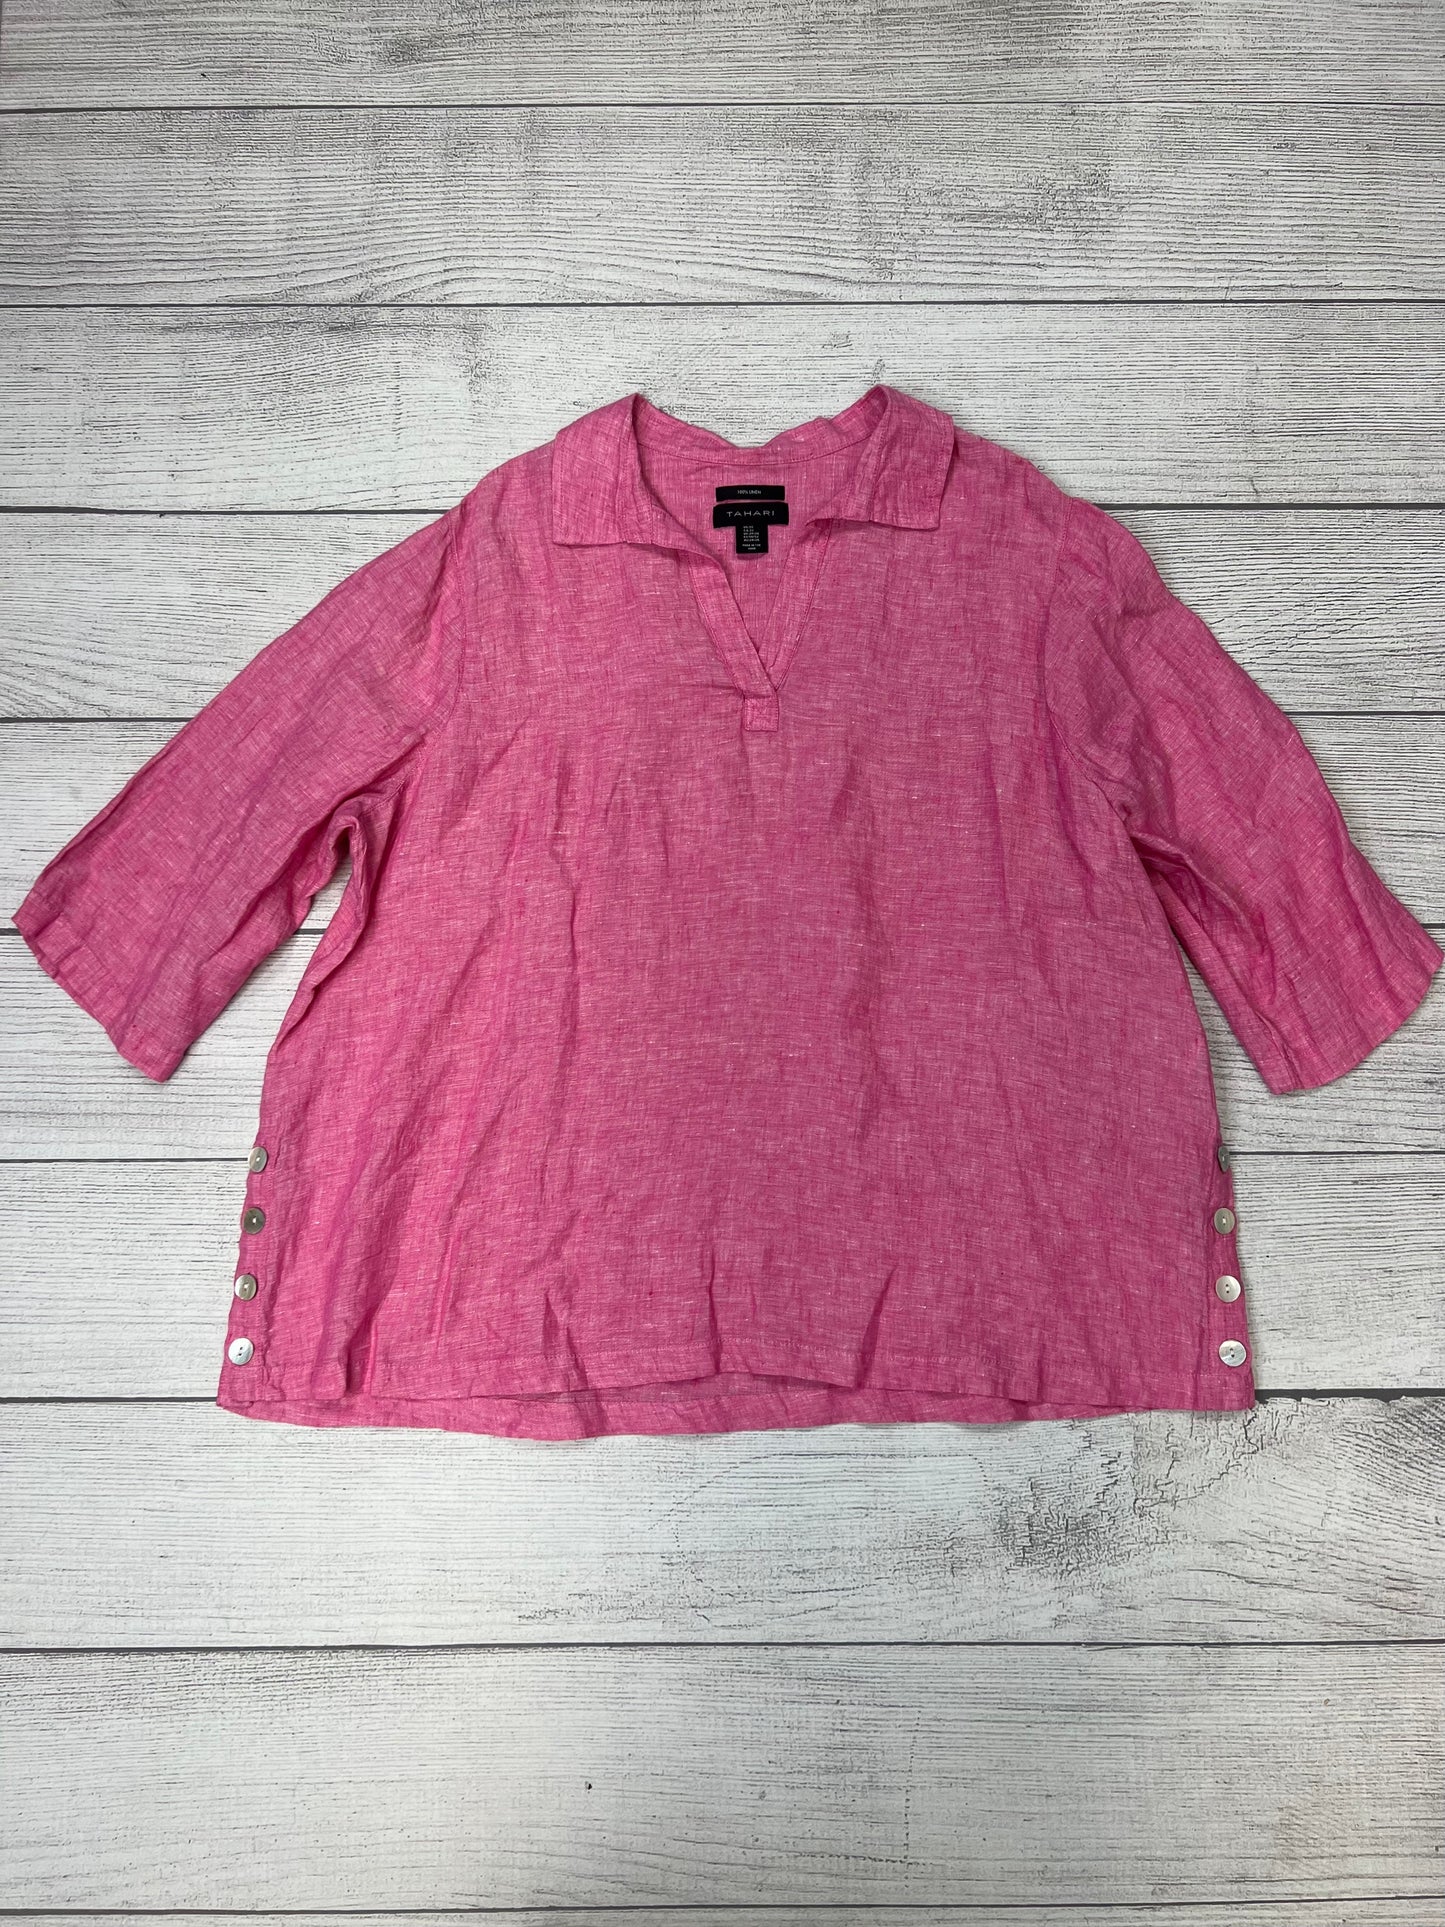 Pink Top Long Sleeve Tahari, Size 2x